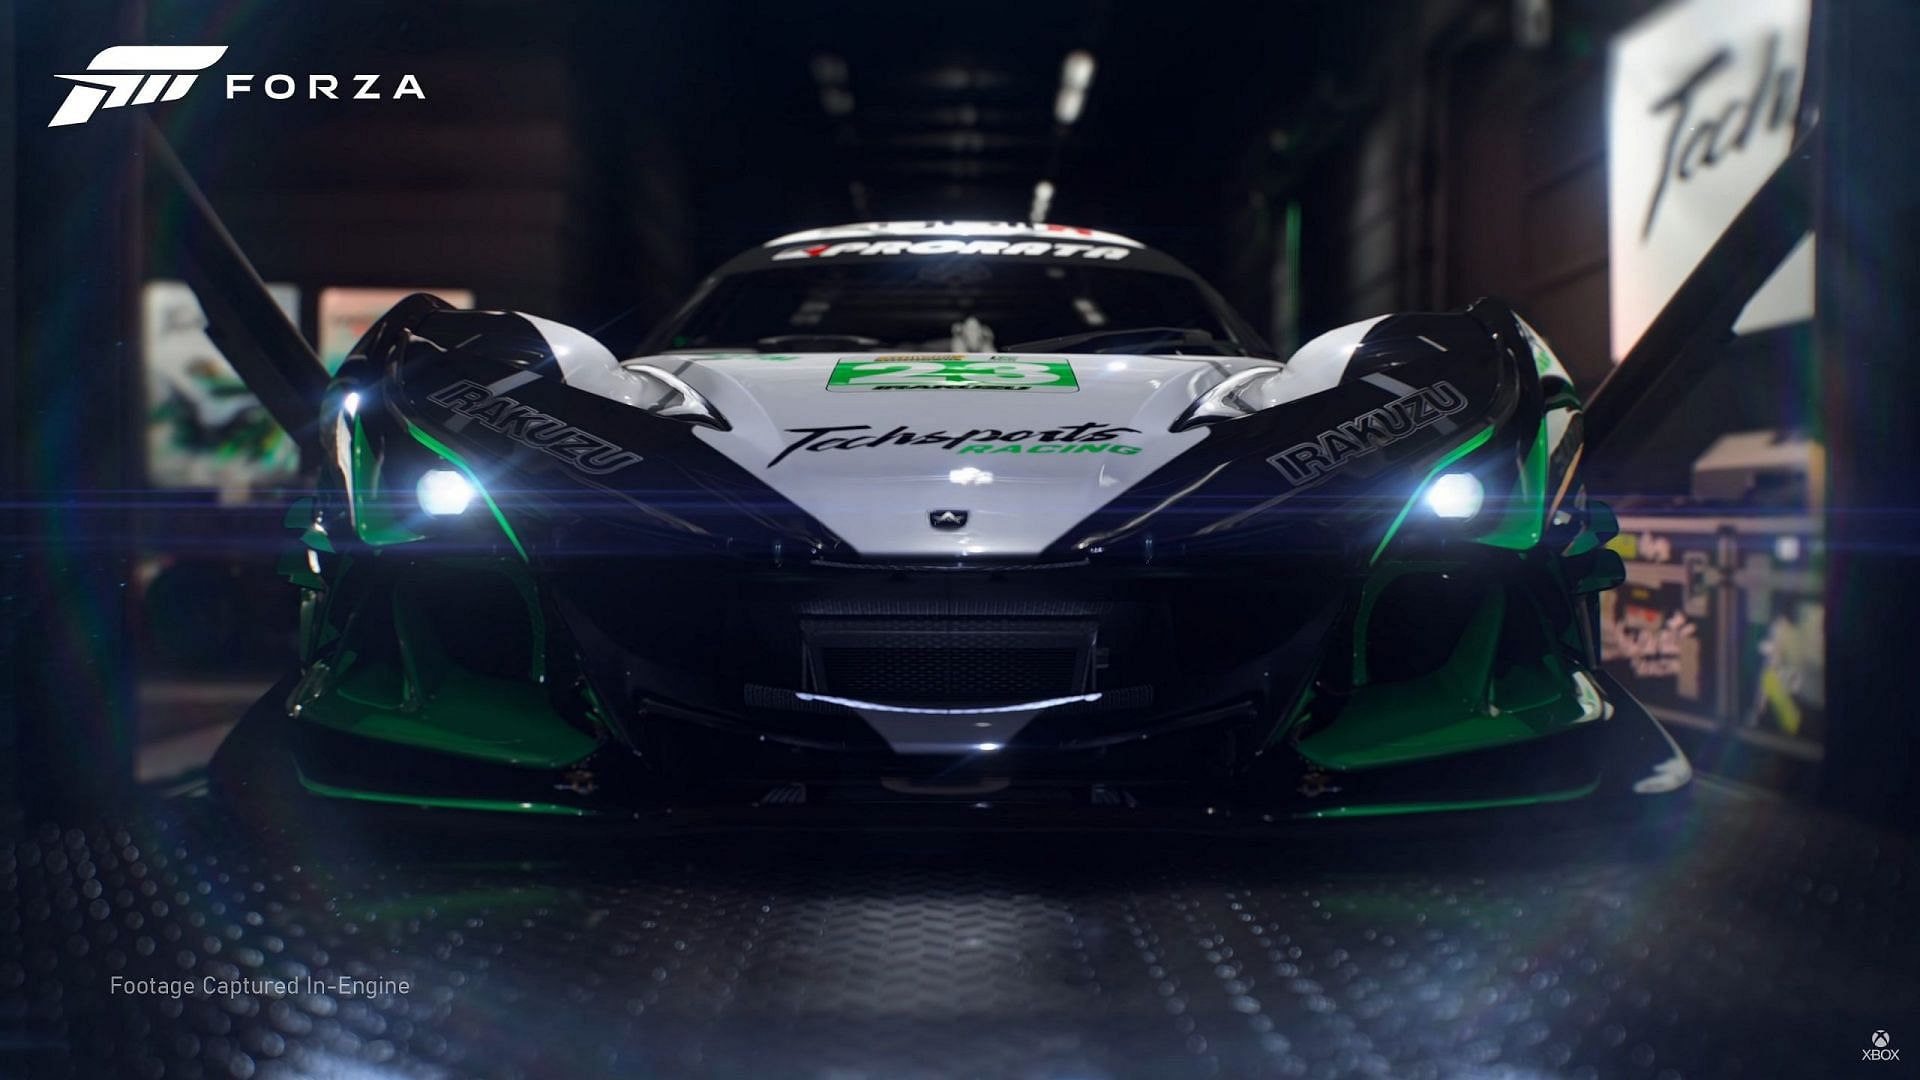 Berapa tanggal rilis Forza Motorsport?